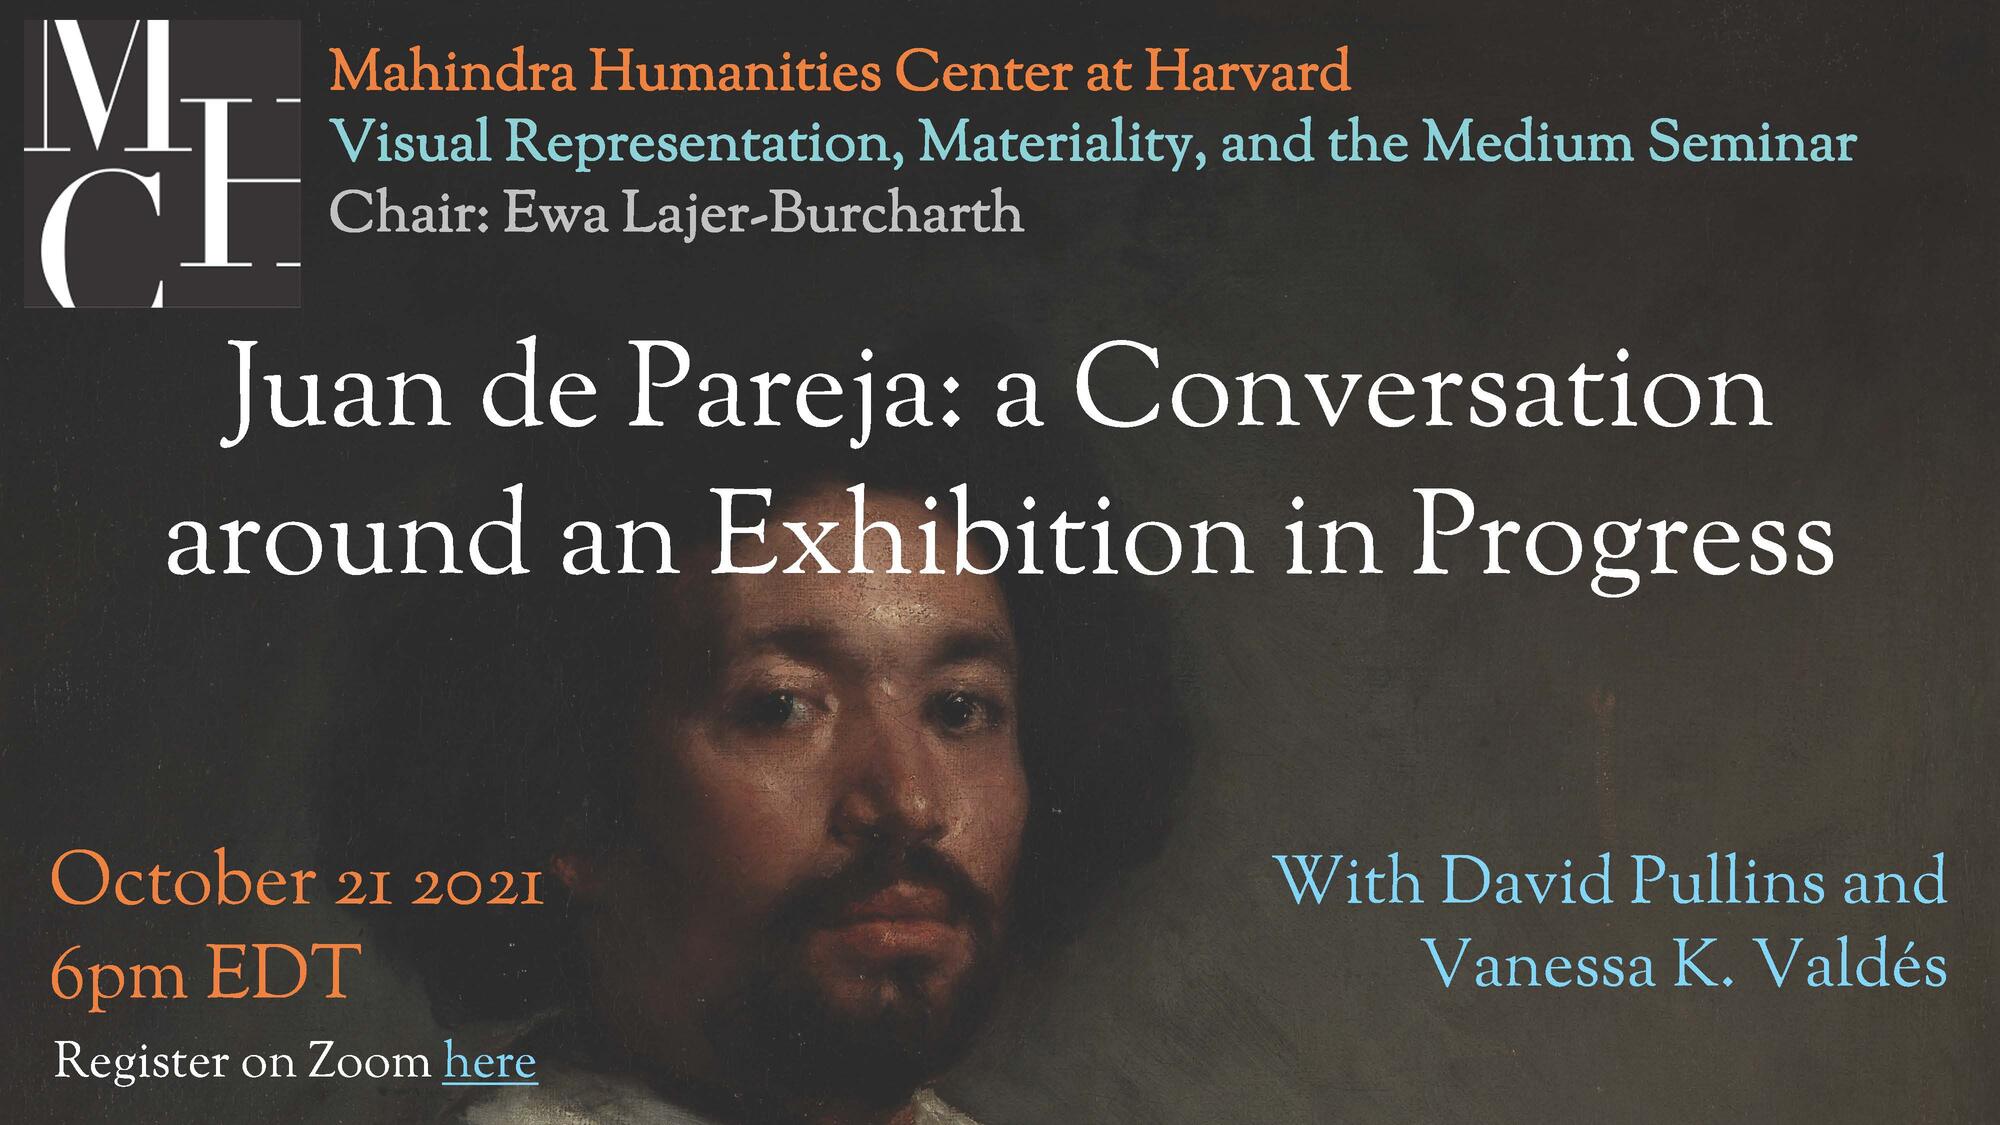 Poster for event "Juan de Pareja, a Conversation around an Exhibition in Progress”